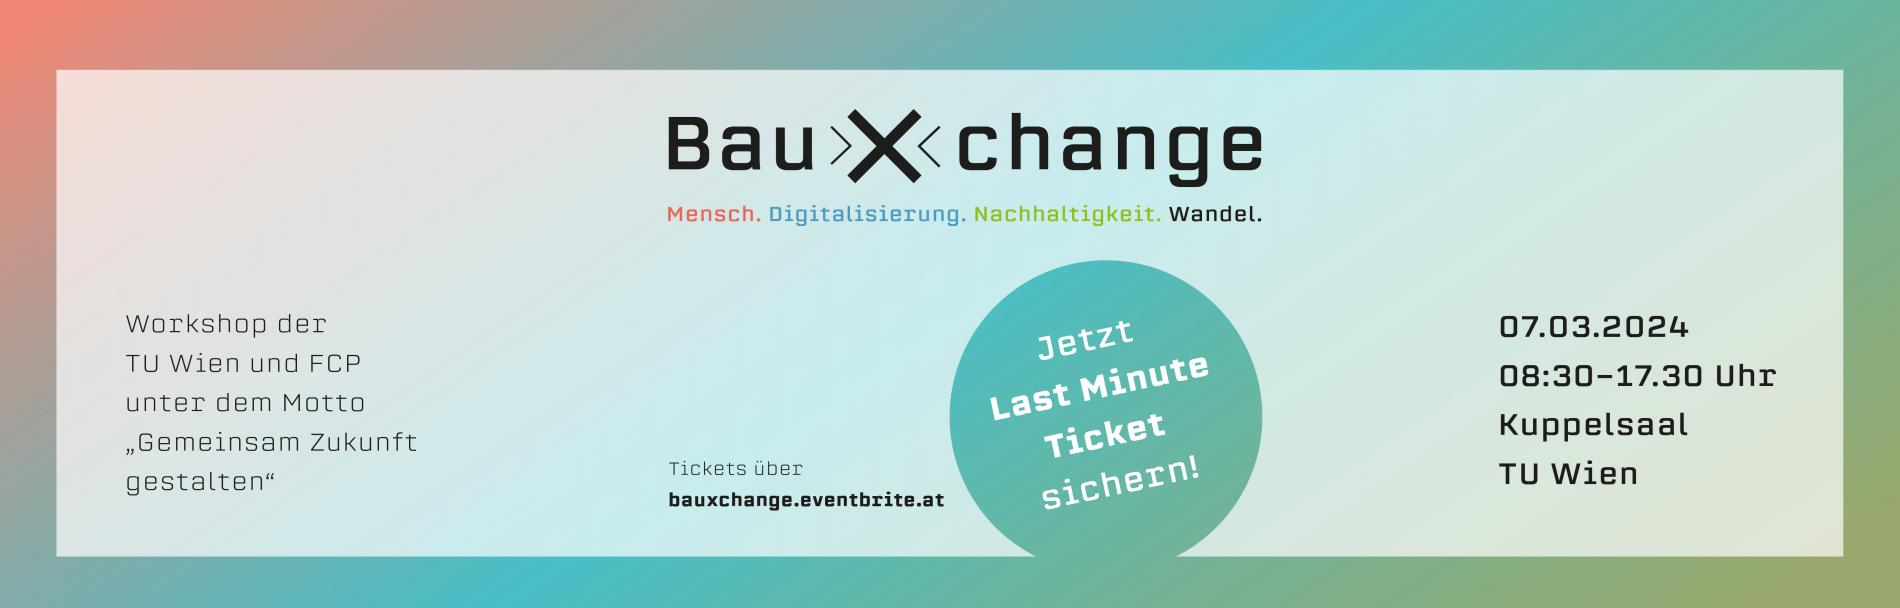 BauXchange Slider